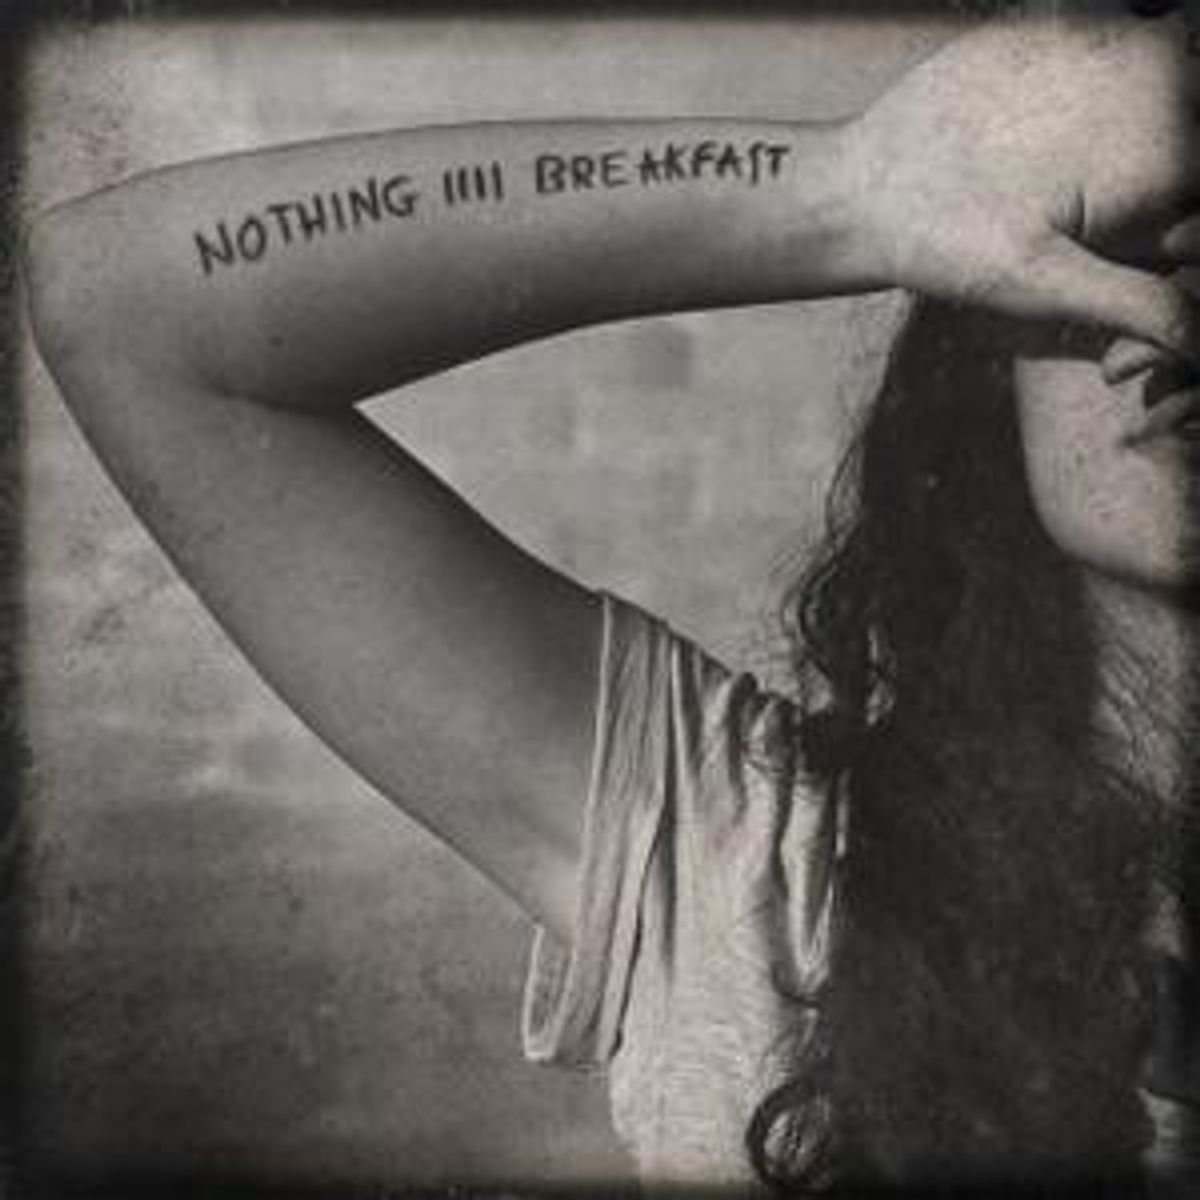 Nothing For Breakfest - 'Nothing IIII Breakfast'